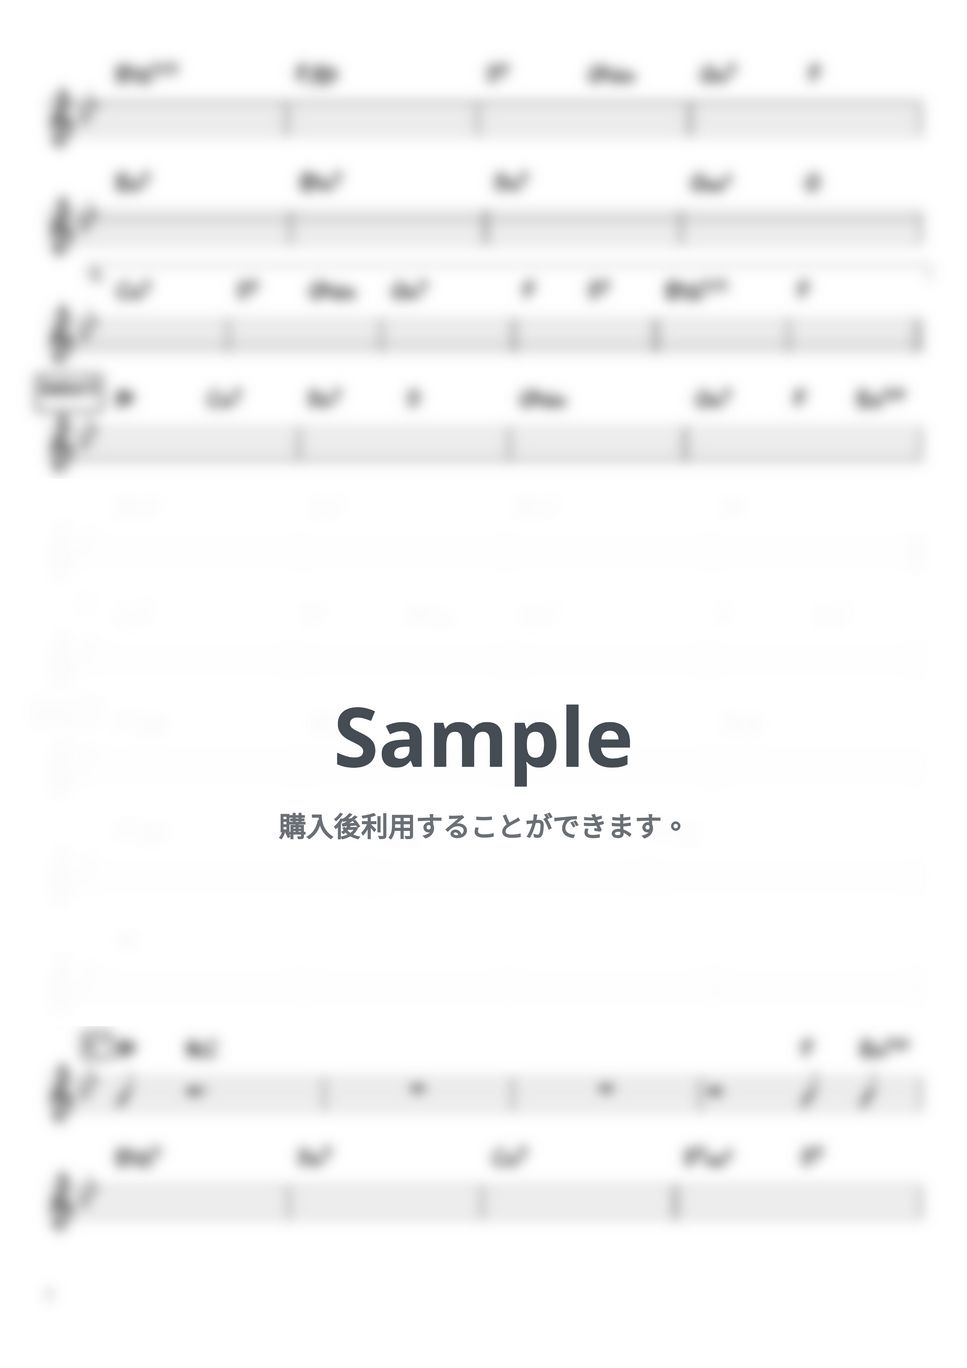 Official髭男dism - パラボラ (バンド用コード譜) by 箱譜屋